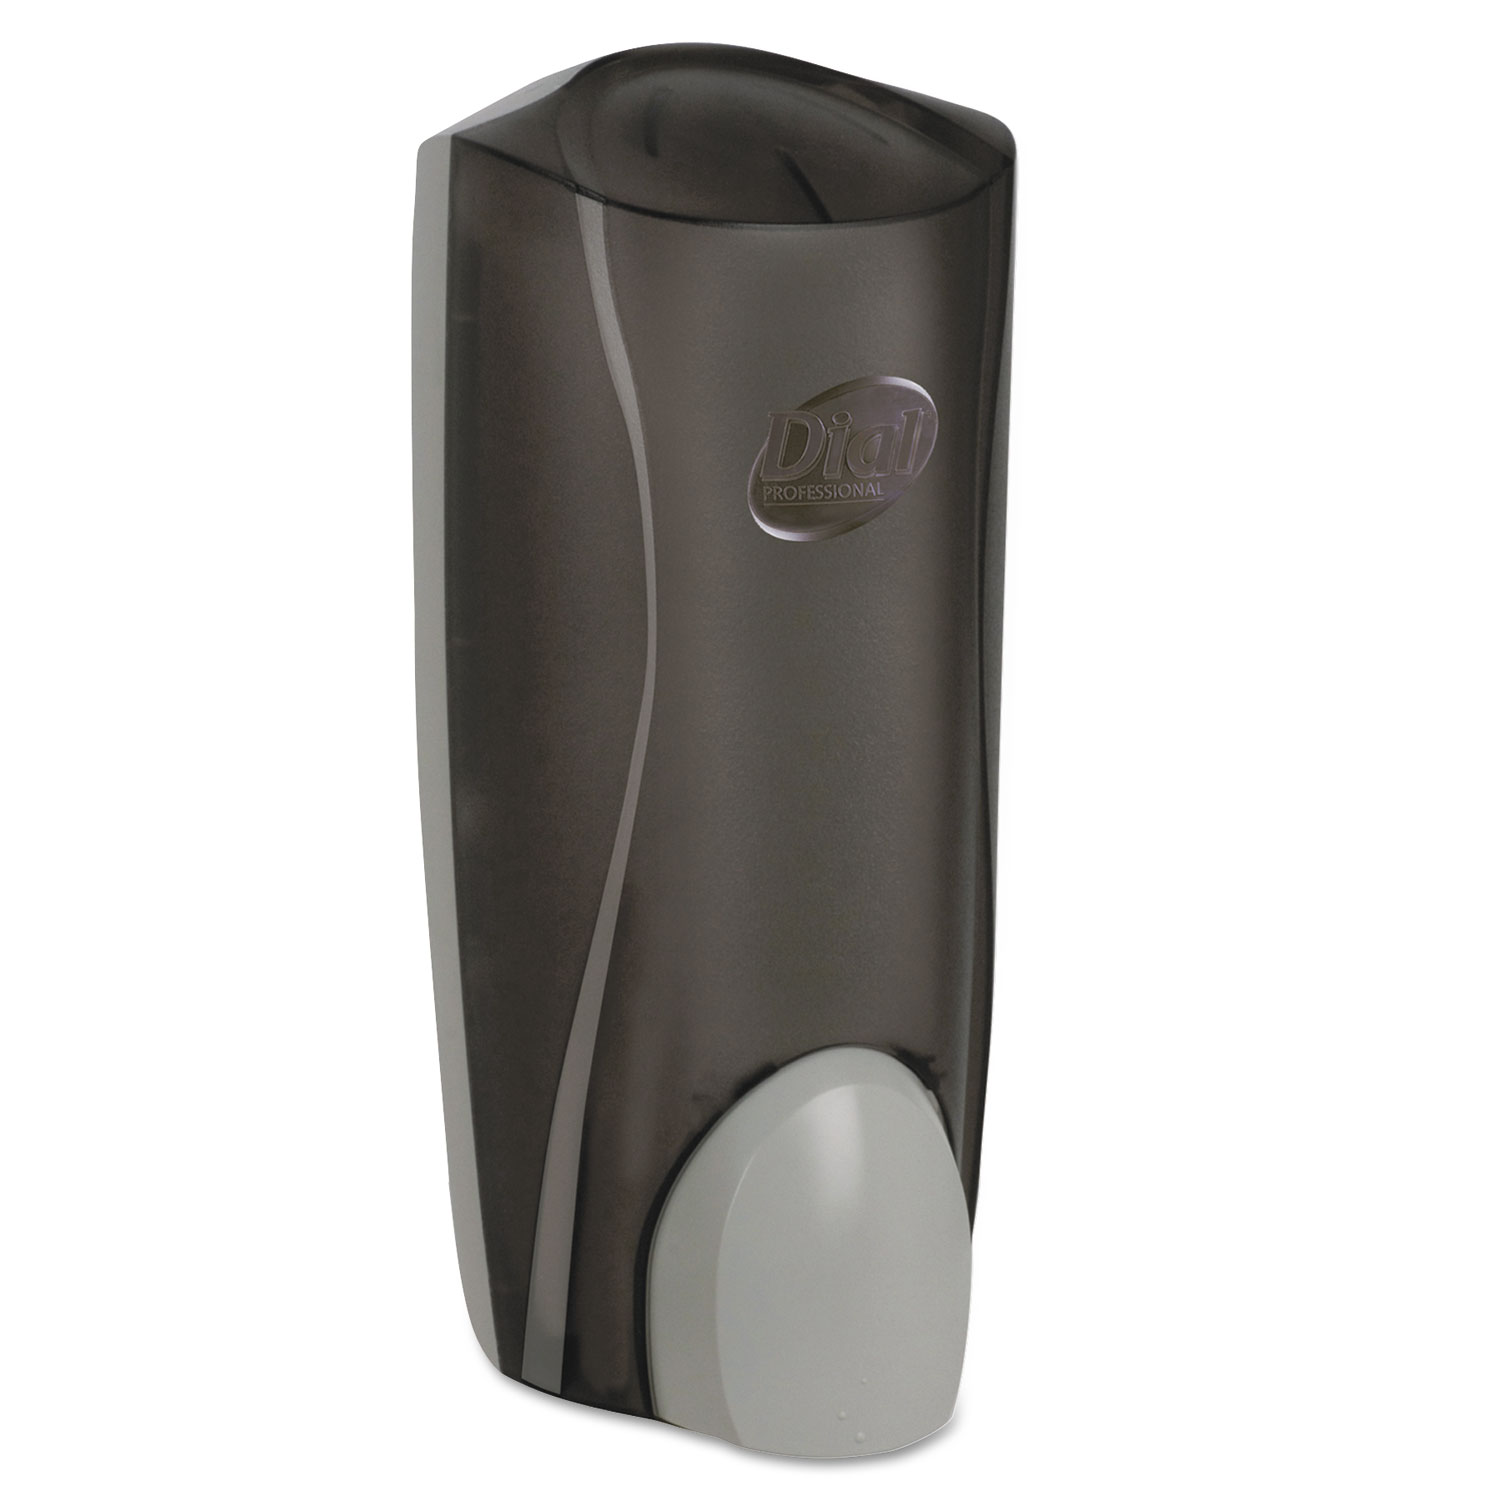  Dial Professional DIA 03922 1 Liter Manual Liquid Dispenser, 5.1 x 4 x 12.3, Smoke (DIA03922) 